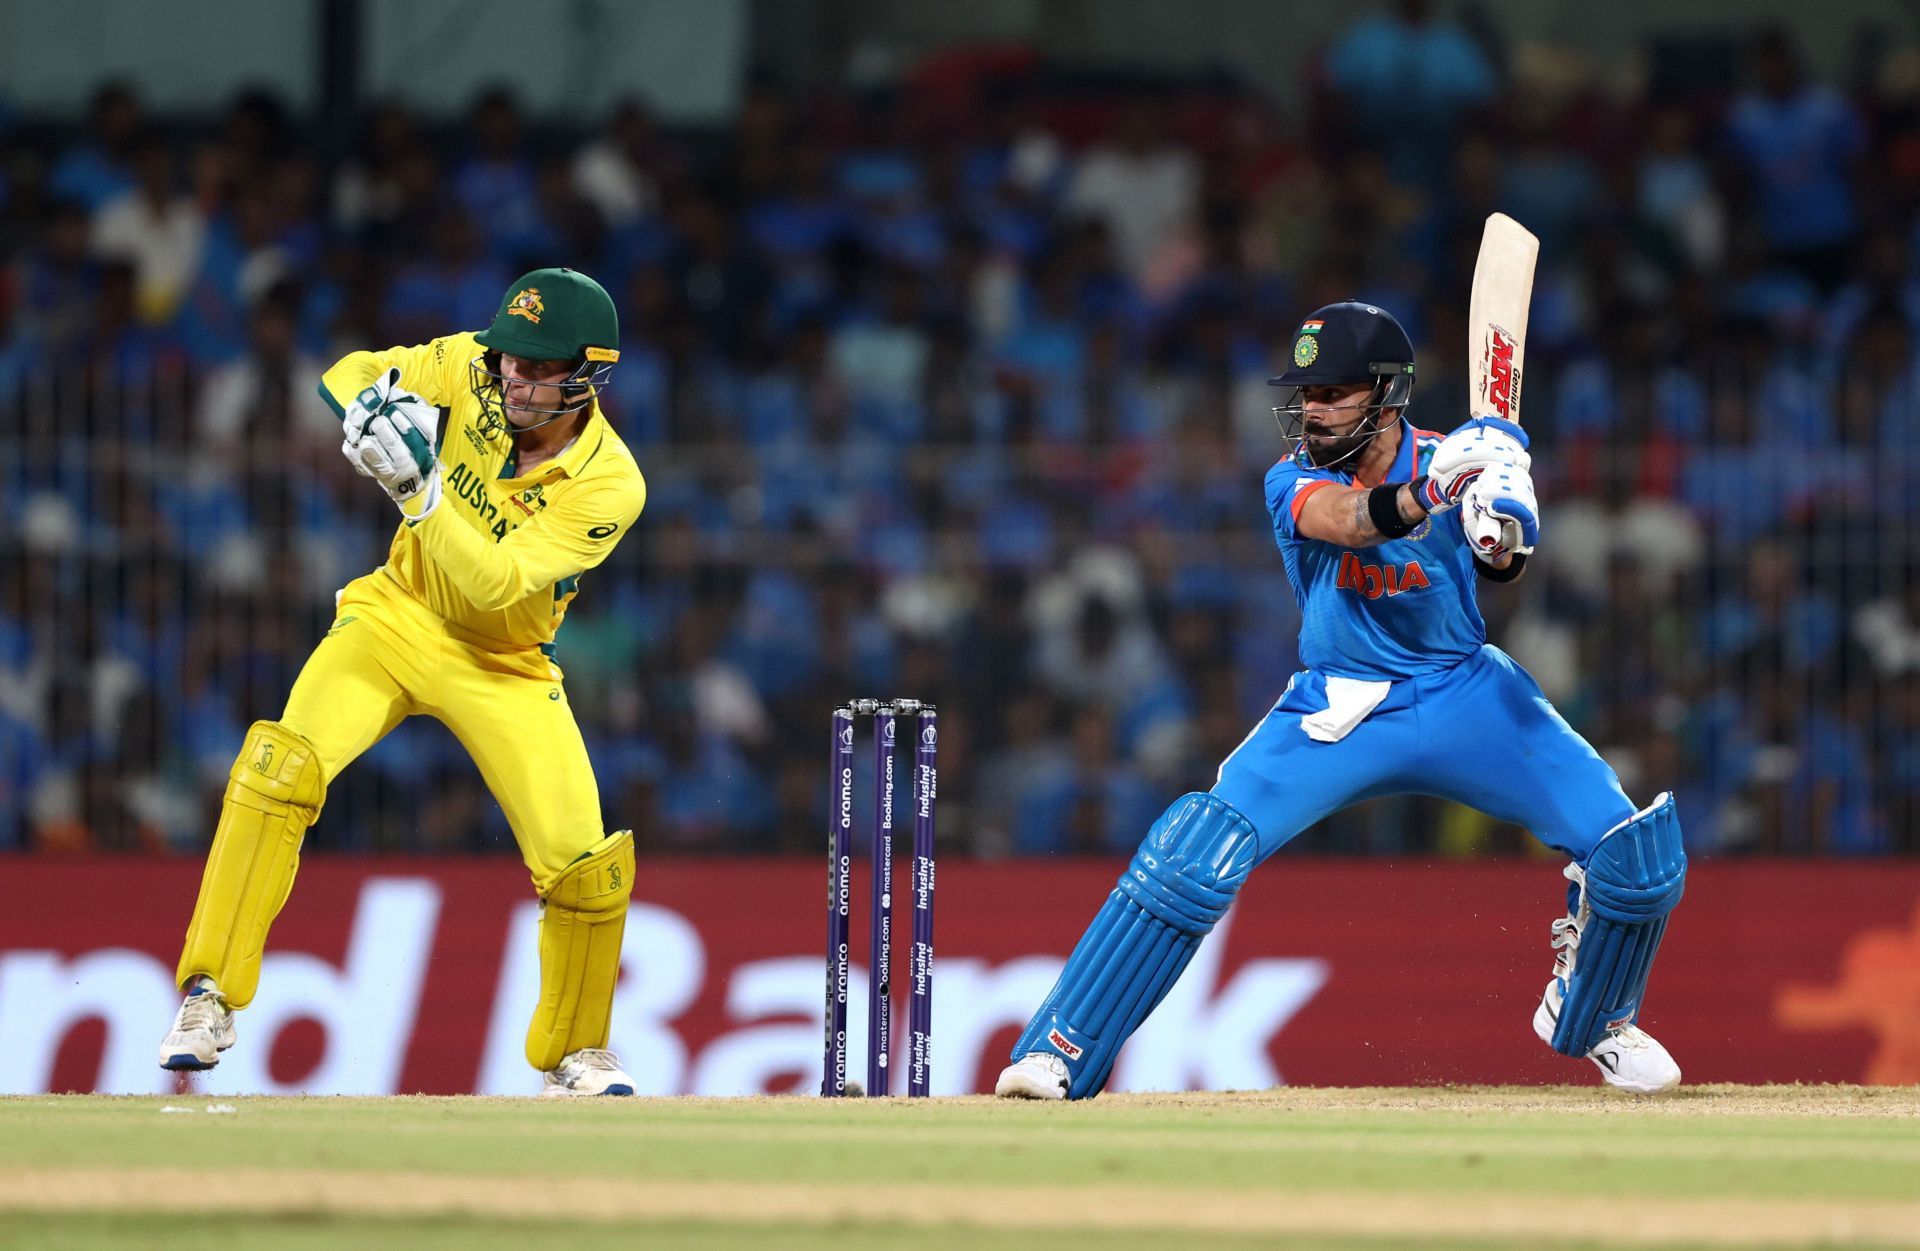 Virat Kohli during his knock of 85 against Australia in Chennai. (Pic: Getty Images)